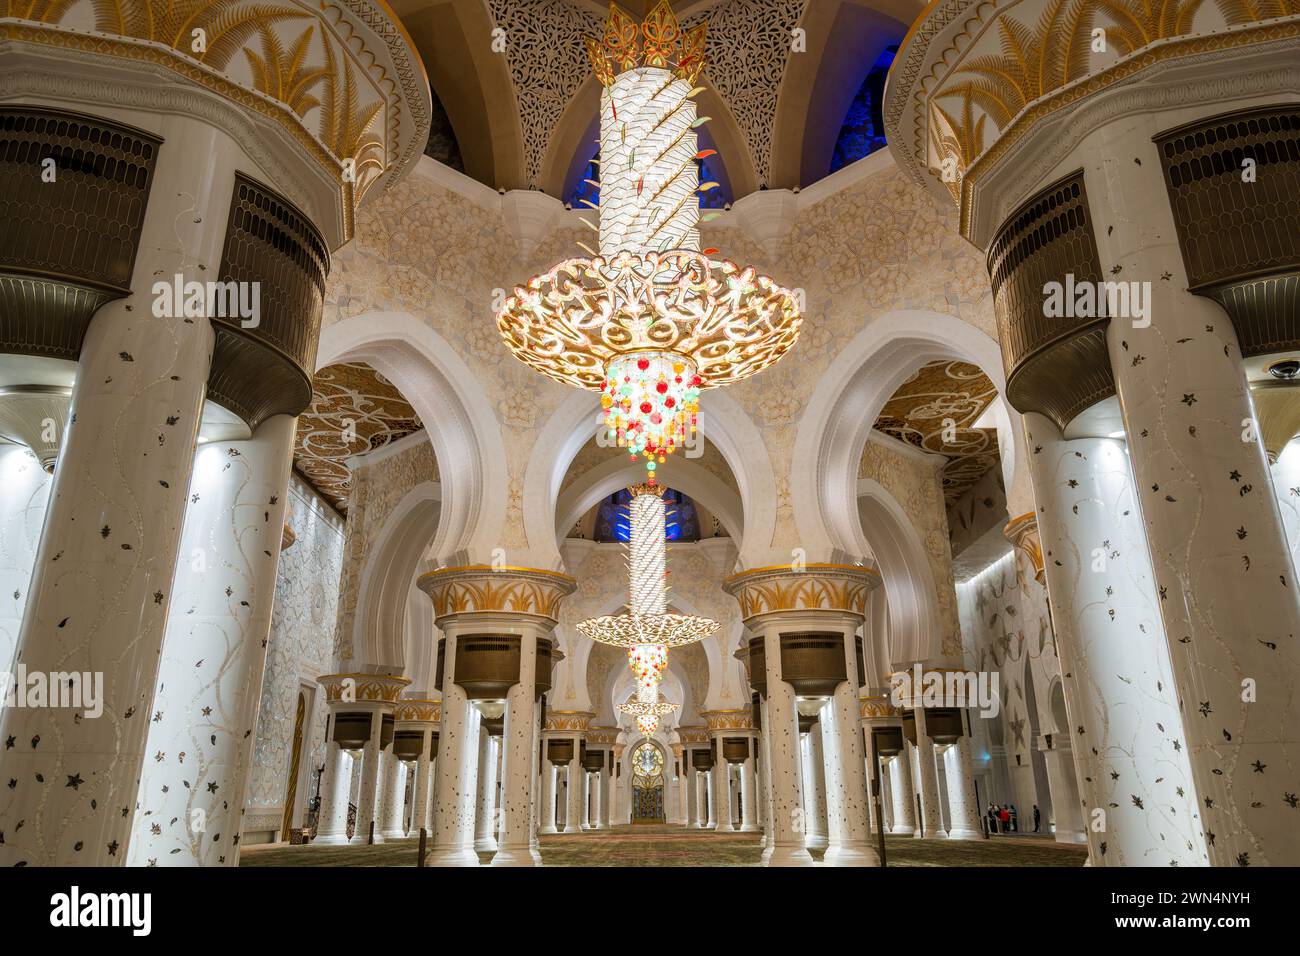 Interiors of architectural landmark Qasr Al-Watan Presidential Palace in Abu Dhabi, United Arab Emirates (UAE). Stock Photo